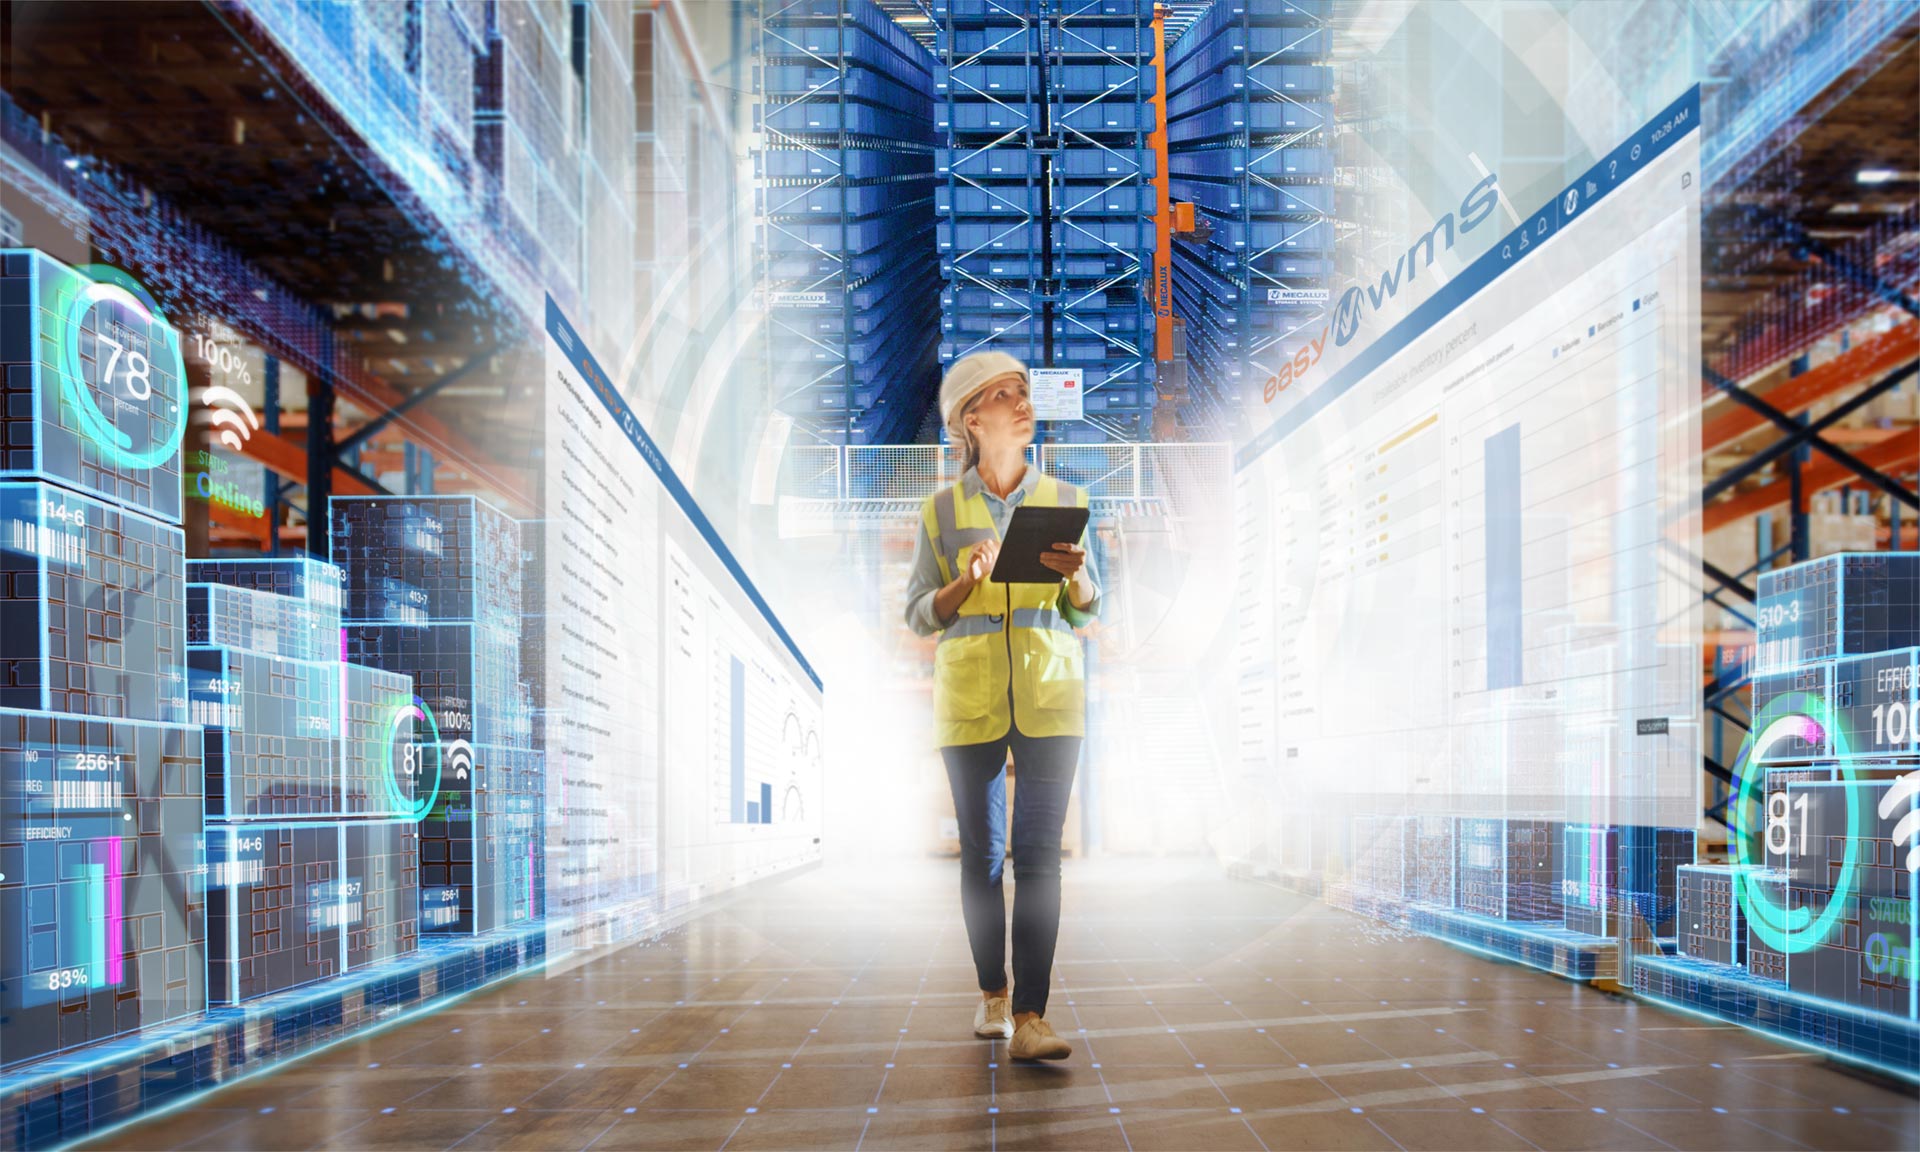 Digital warehousing: technology optimizes logistics